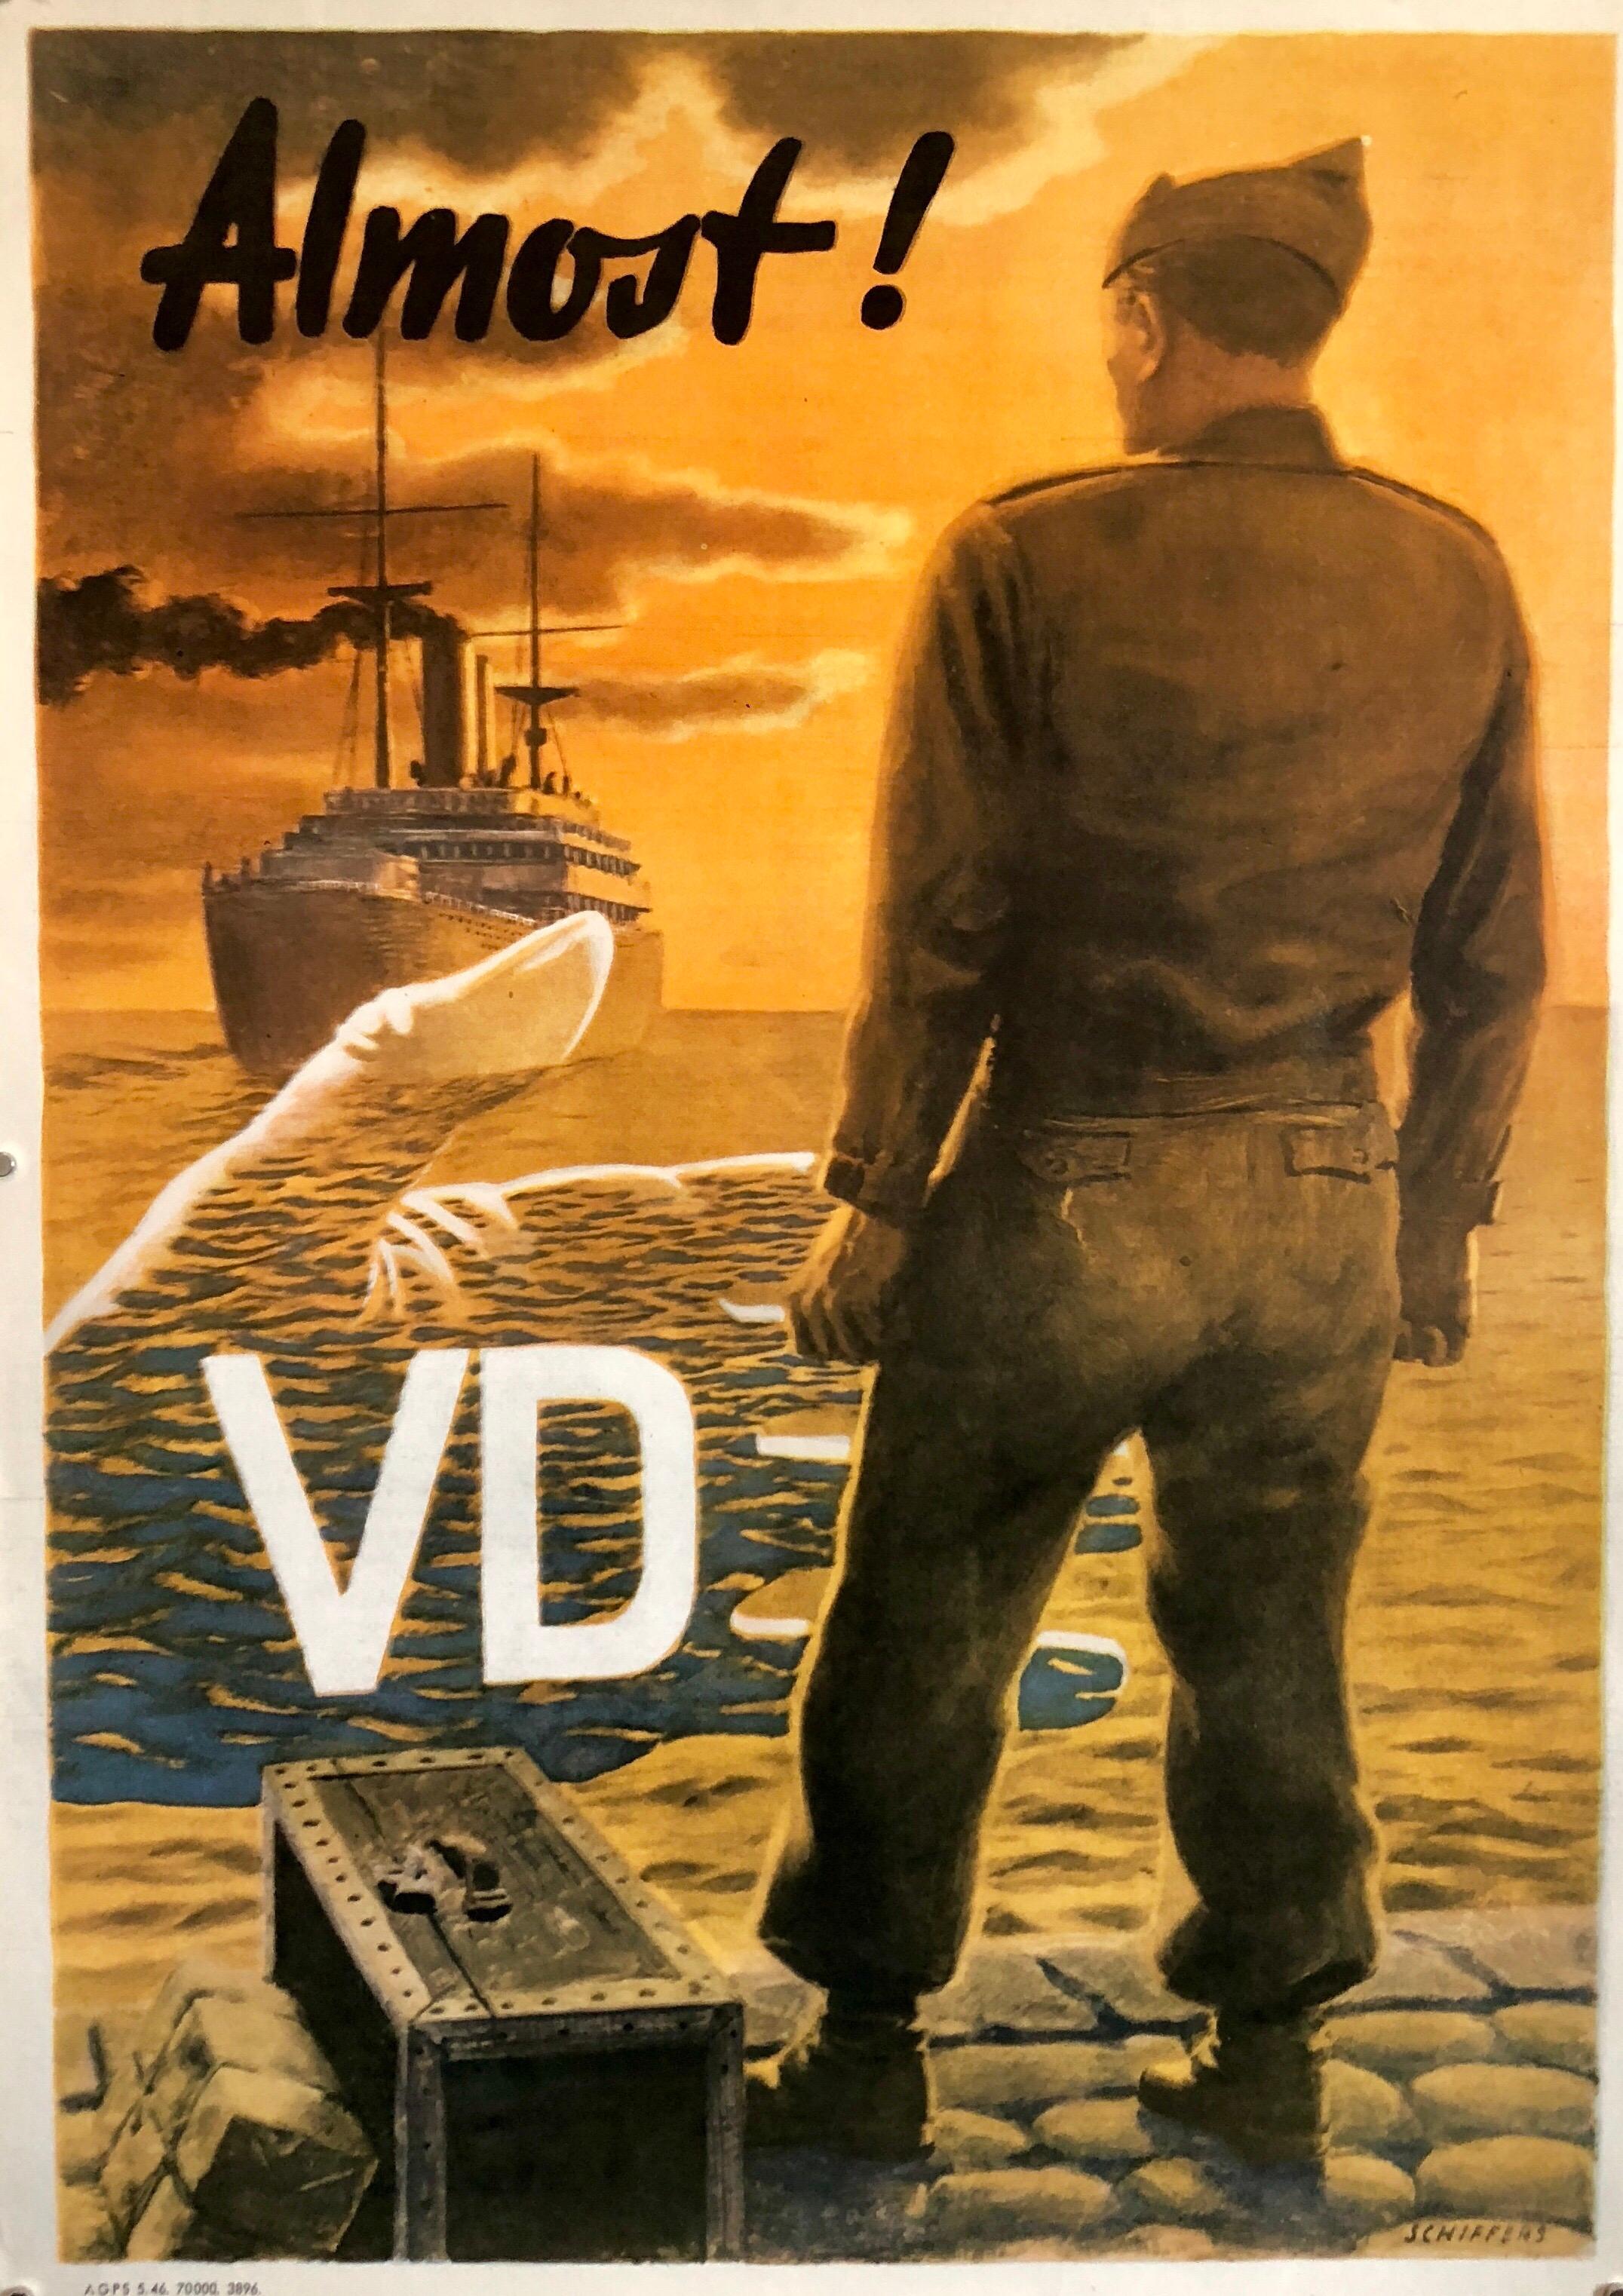 Original Vintage Color World War II Propaganda Poster "Almost" Offset Lithograph